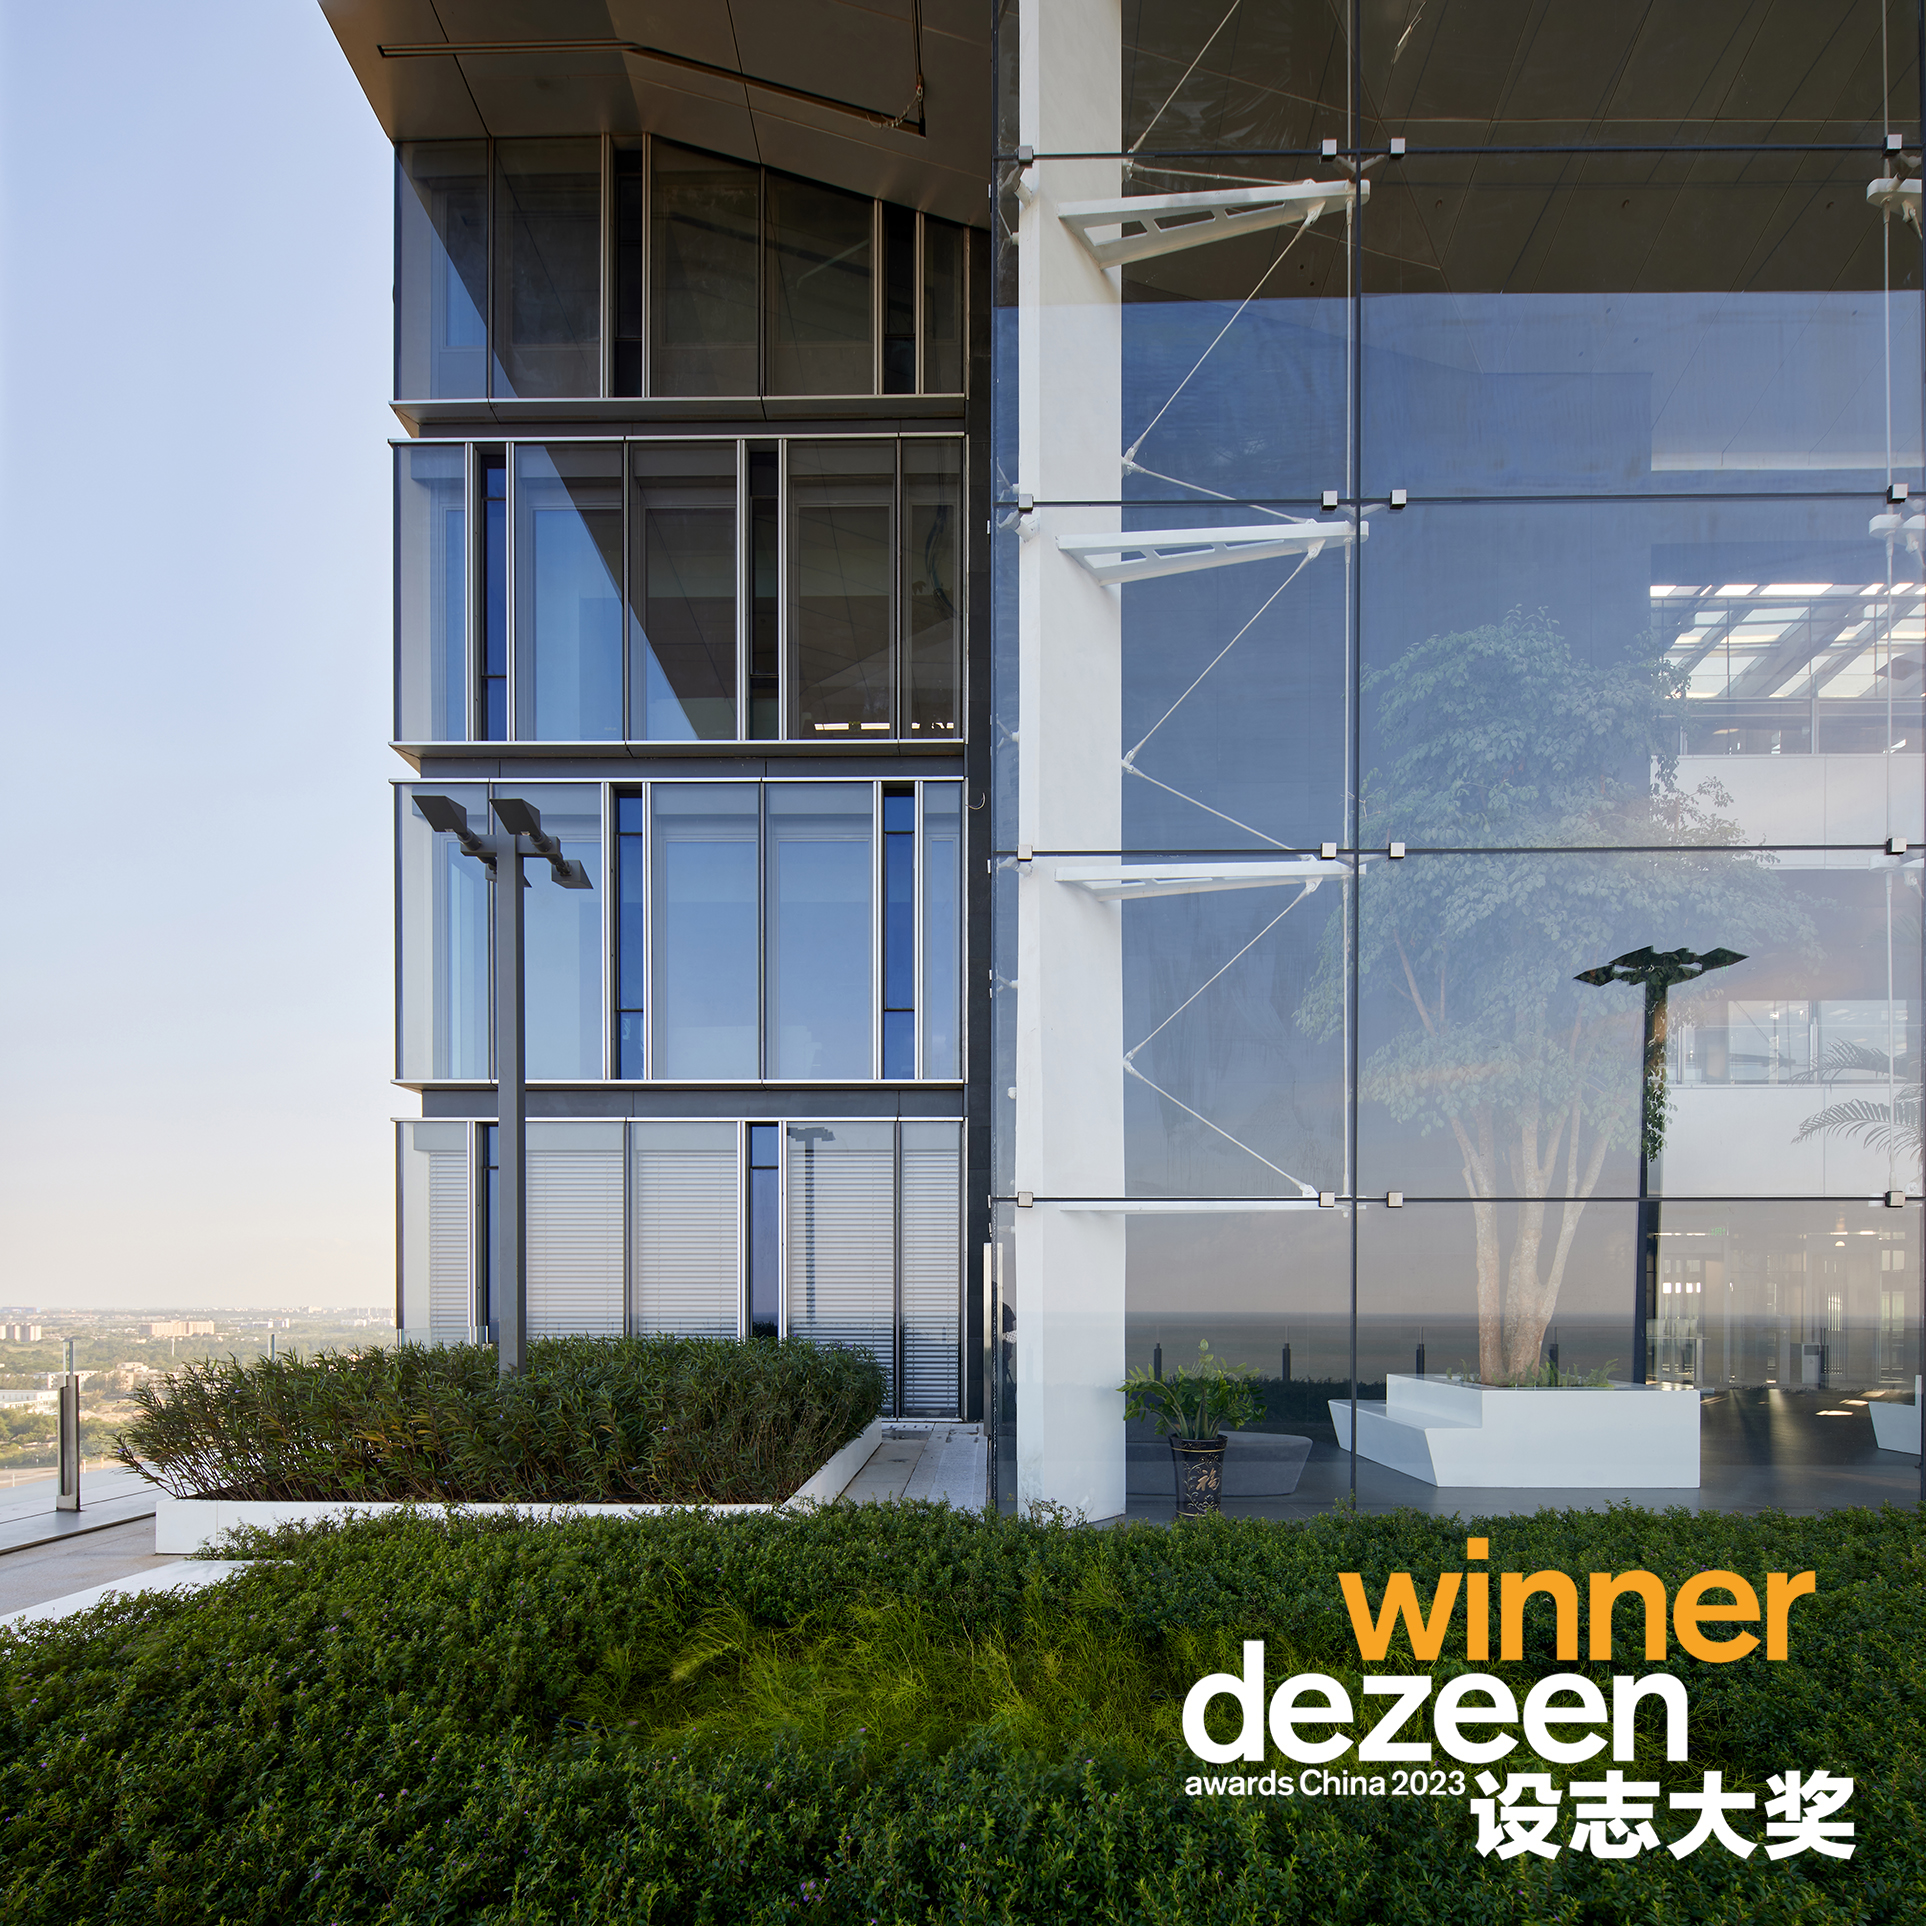 Hainan Energy Trading Building named winner in Dezeen Awards China